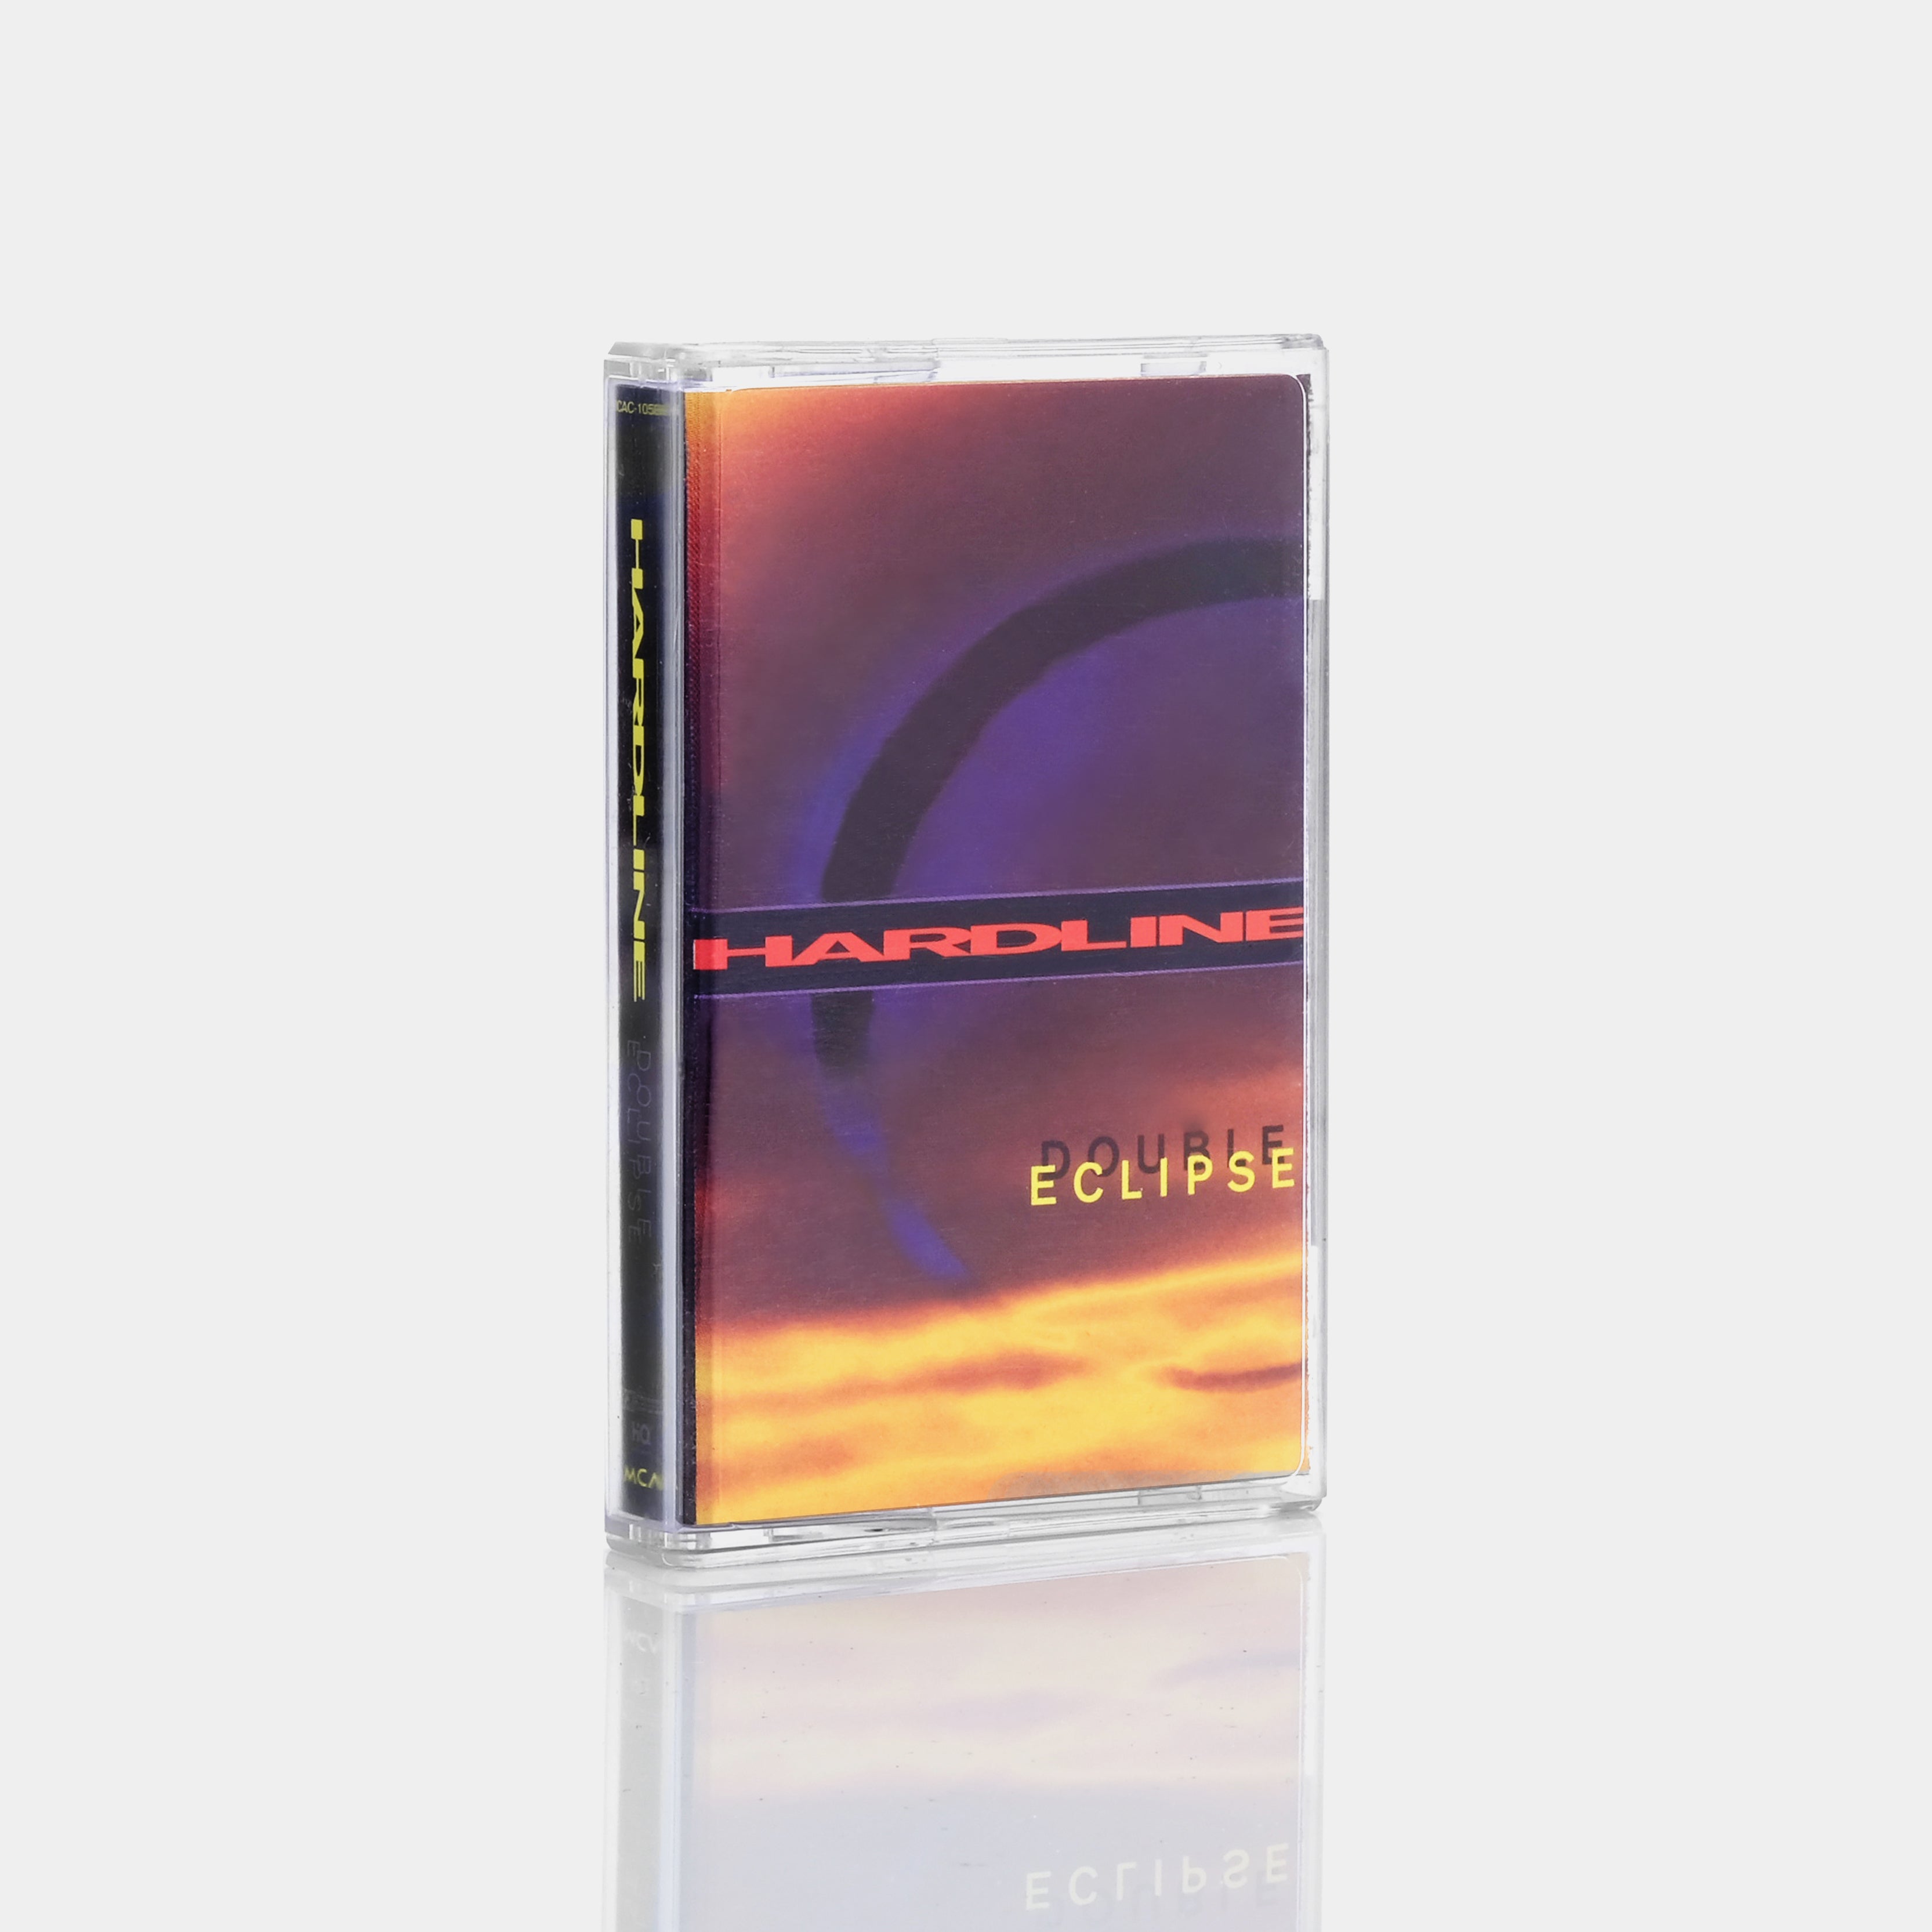 Hardline - Double Eclipse Cassette Tape